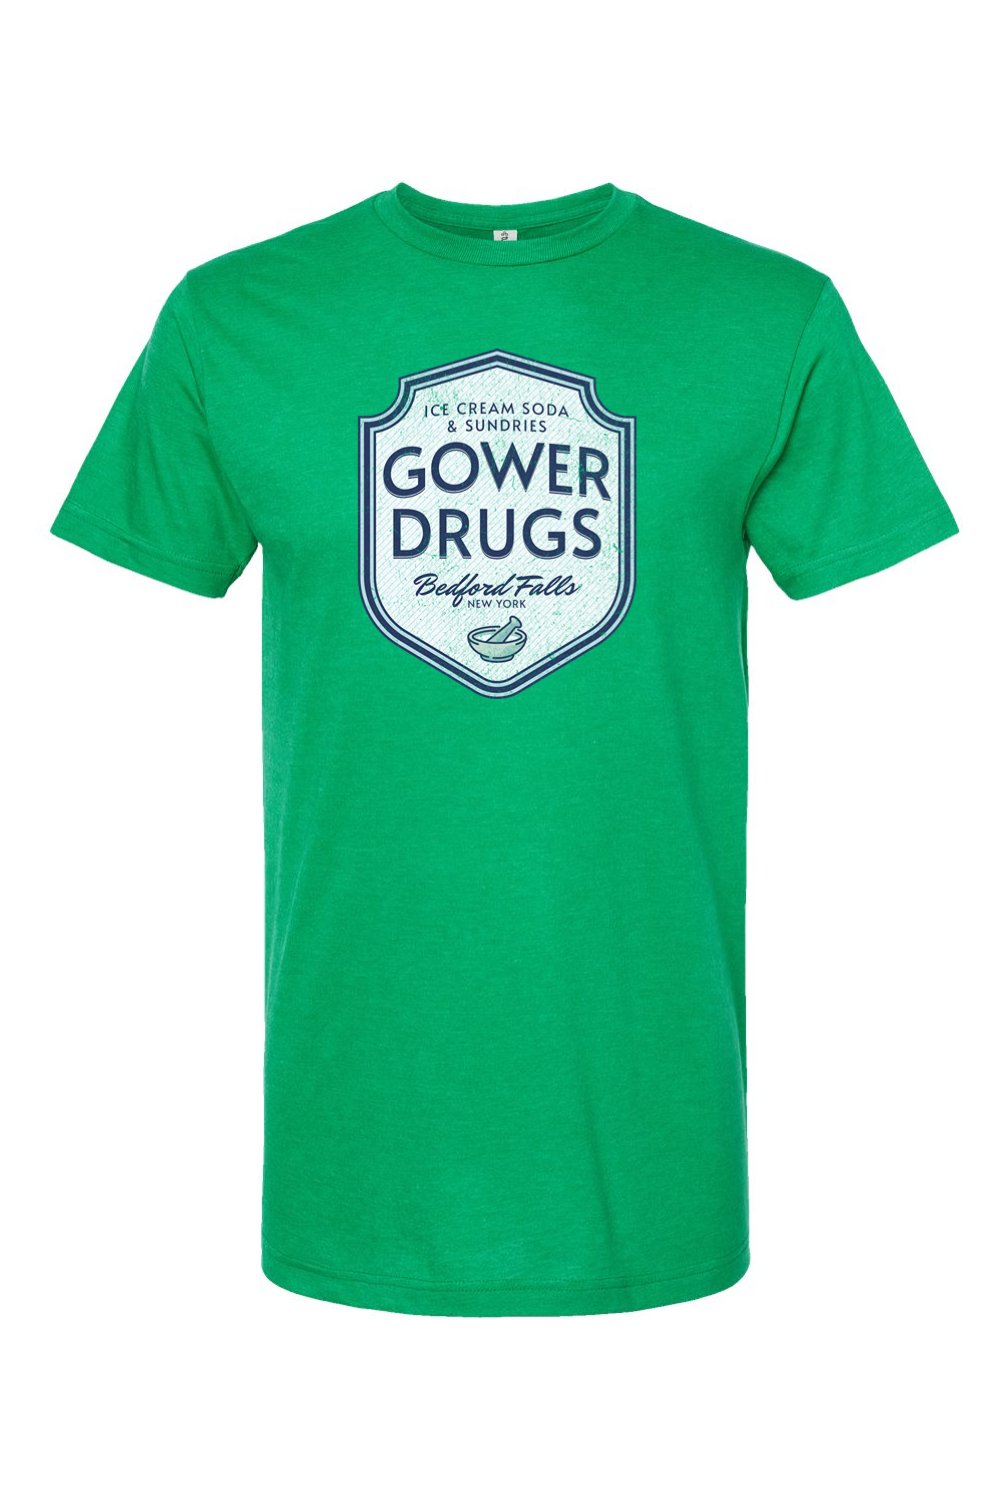 Gower Drugs -  It's a Wonderful Life - Yinzylvania